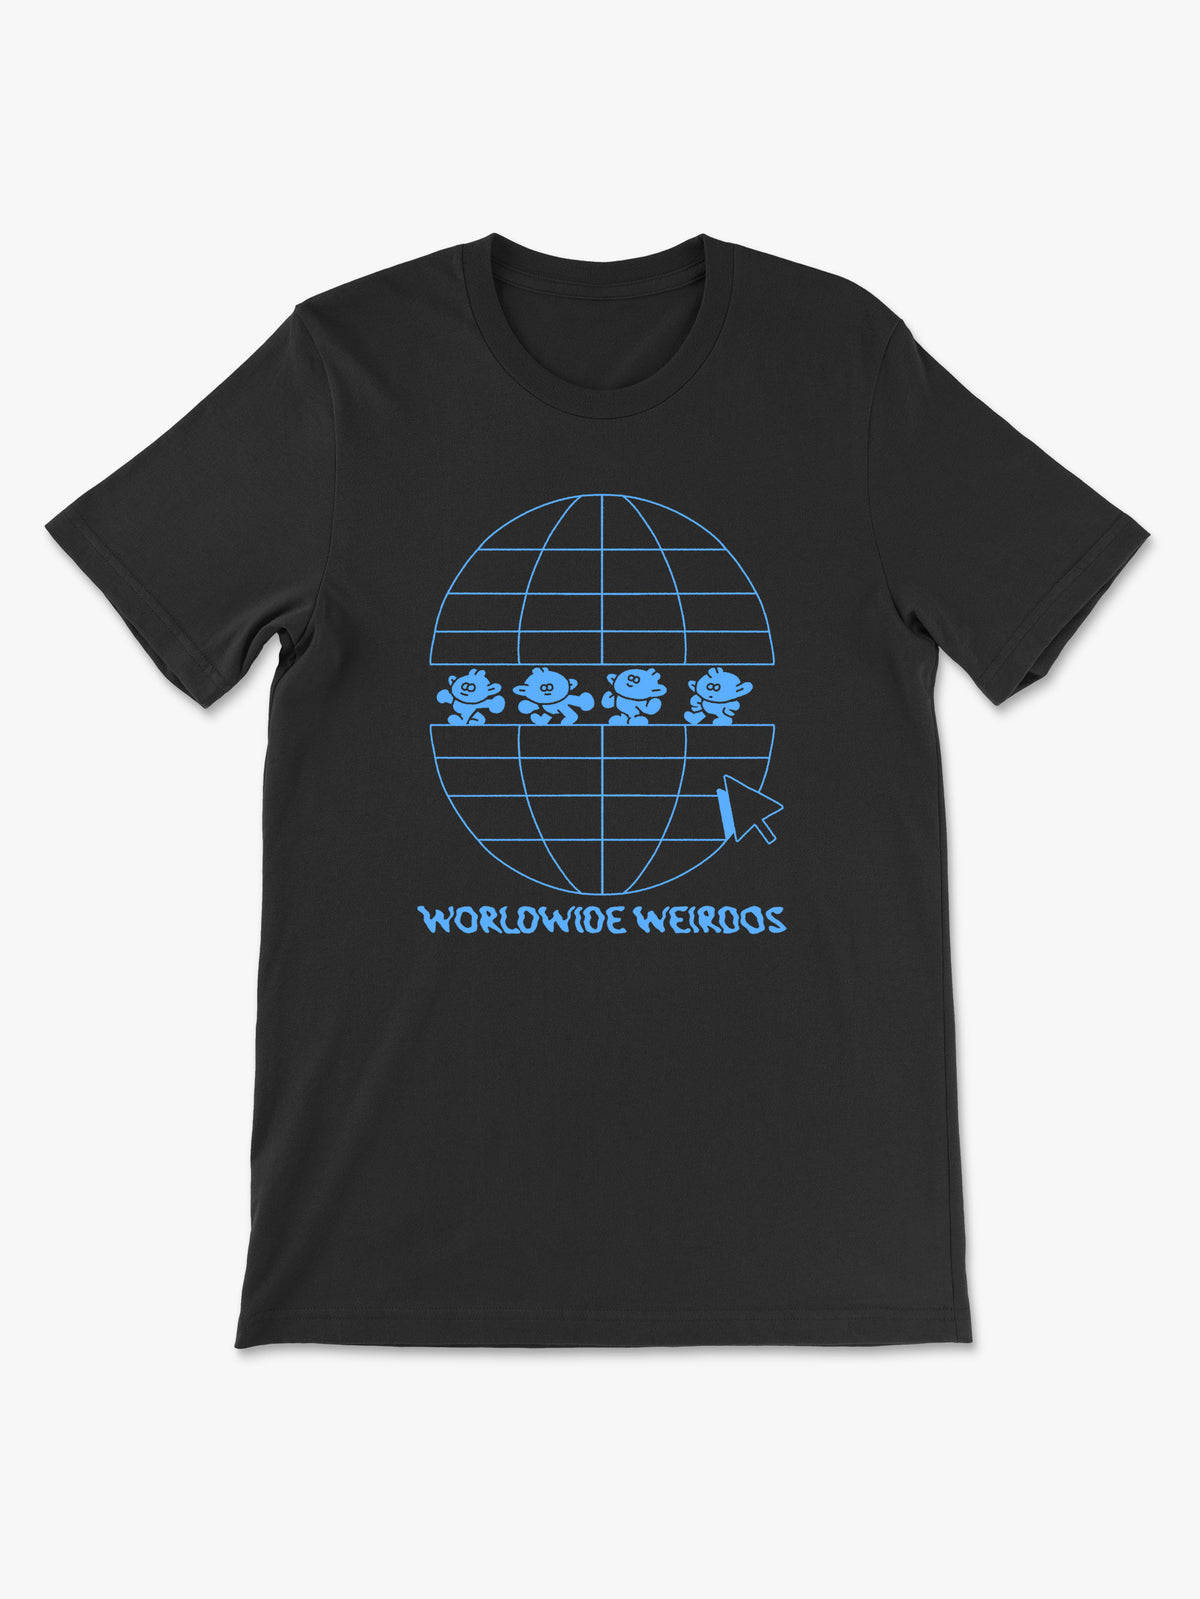 Worldwide Weirdos by Gumshoegumshoe